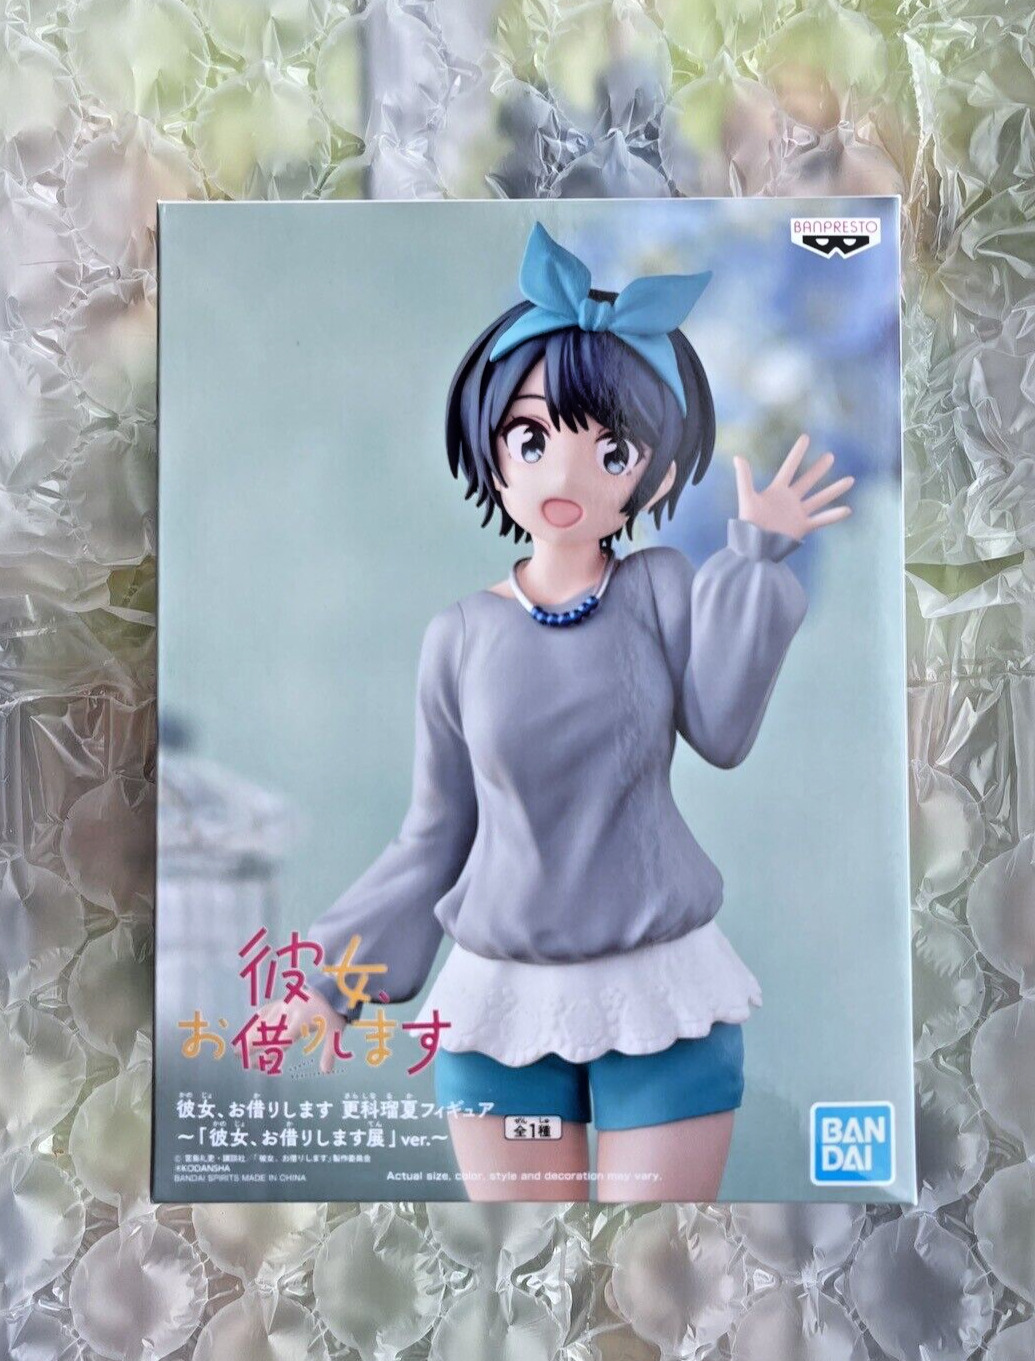 NIB Banpresto Rent a Girlfriend Anime Figure Toy Ruka Sarashina Exhibition